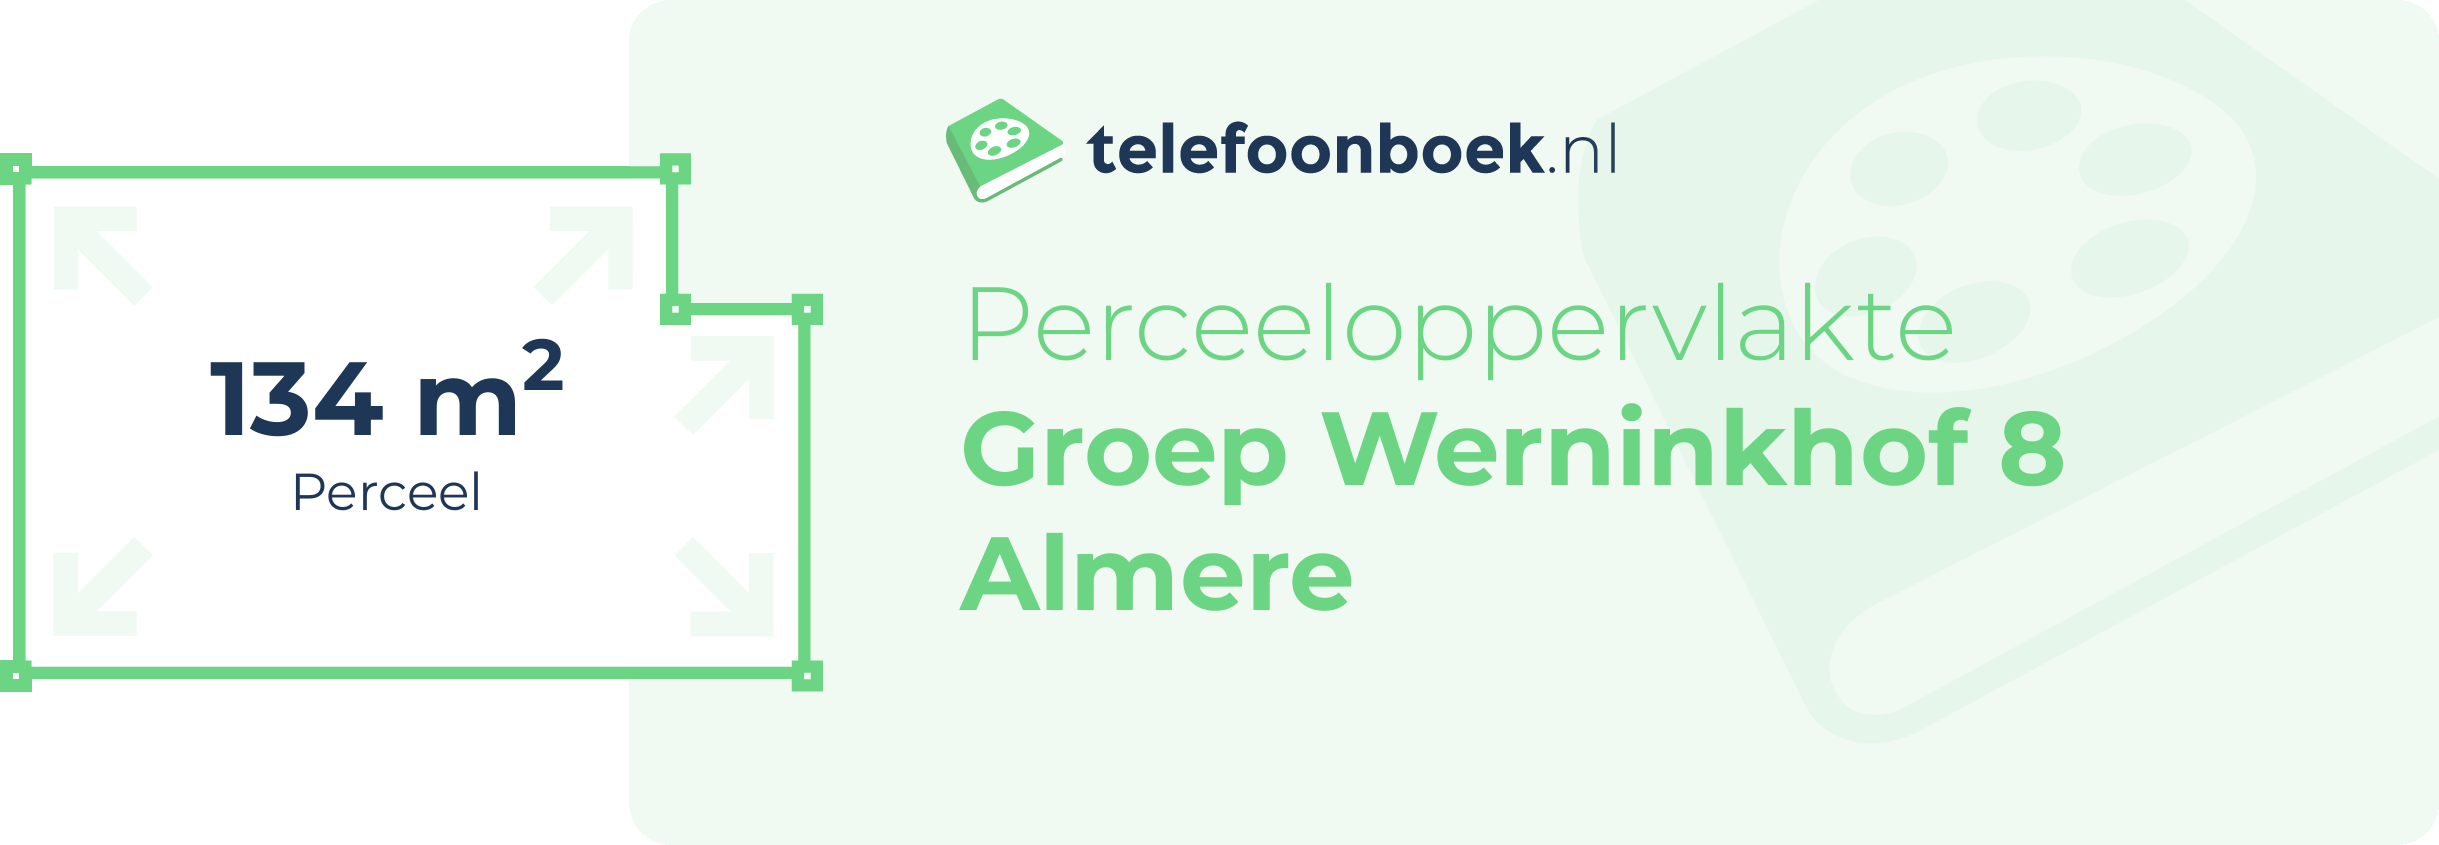 Perceeloppervlakte Groep Werninkhof 8 Almere